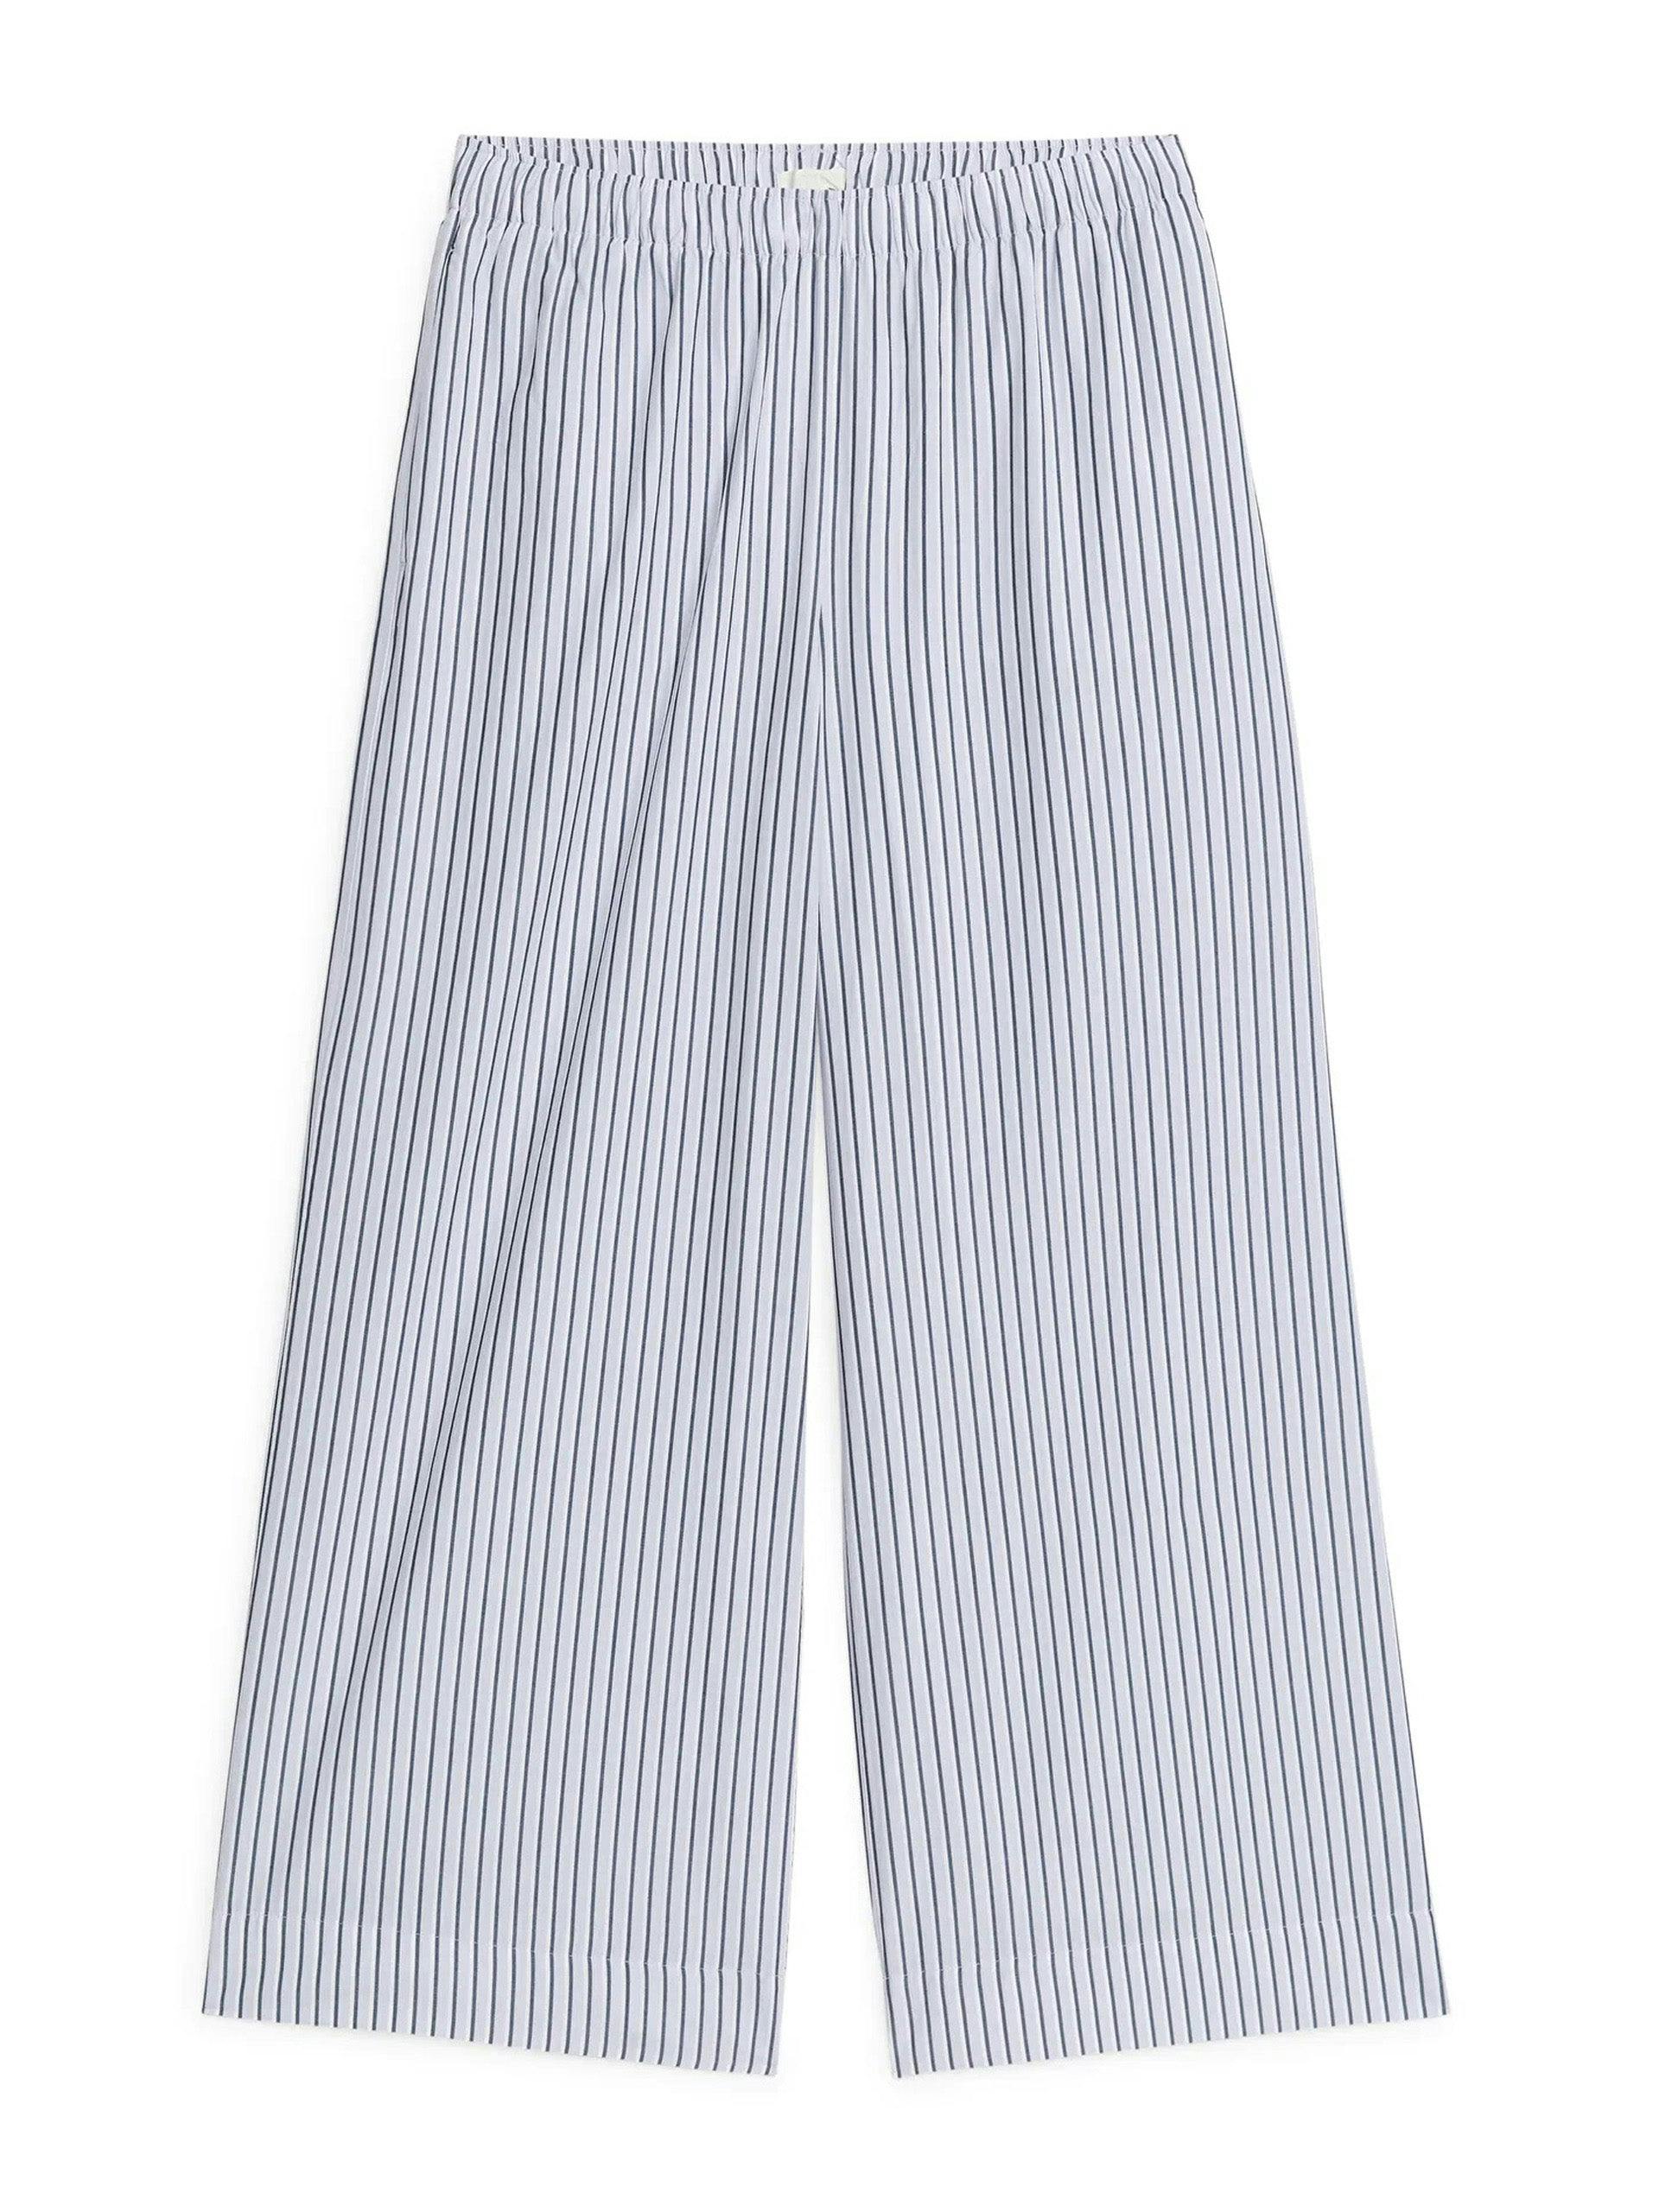 White and black striped pyjama bottoms